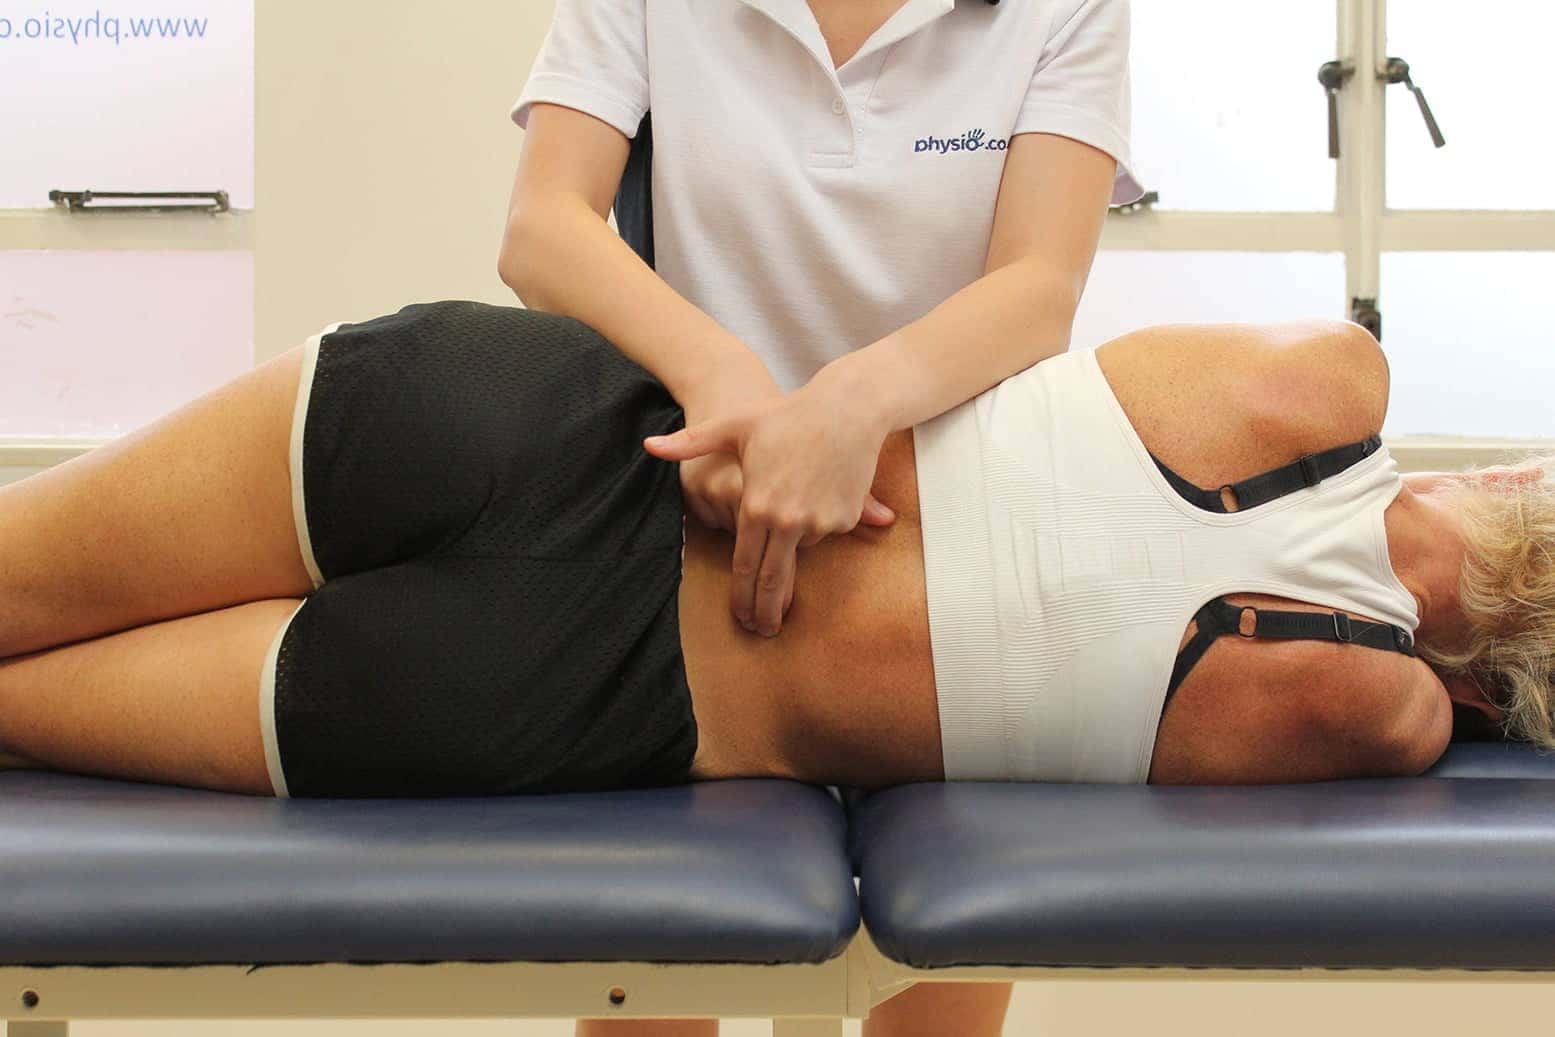 Patient receiving a massage